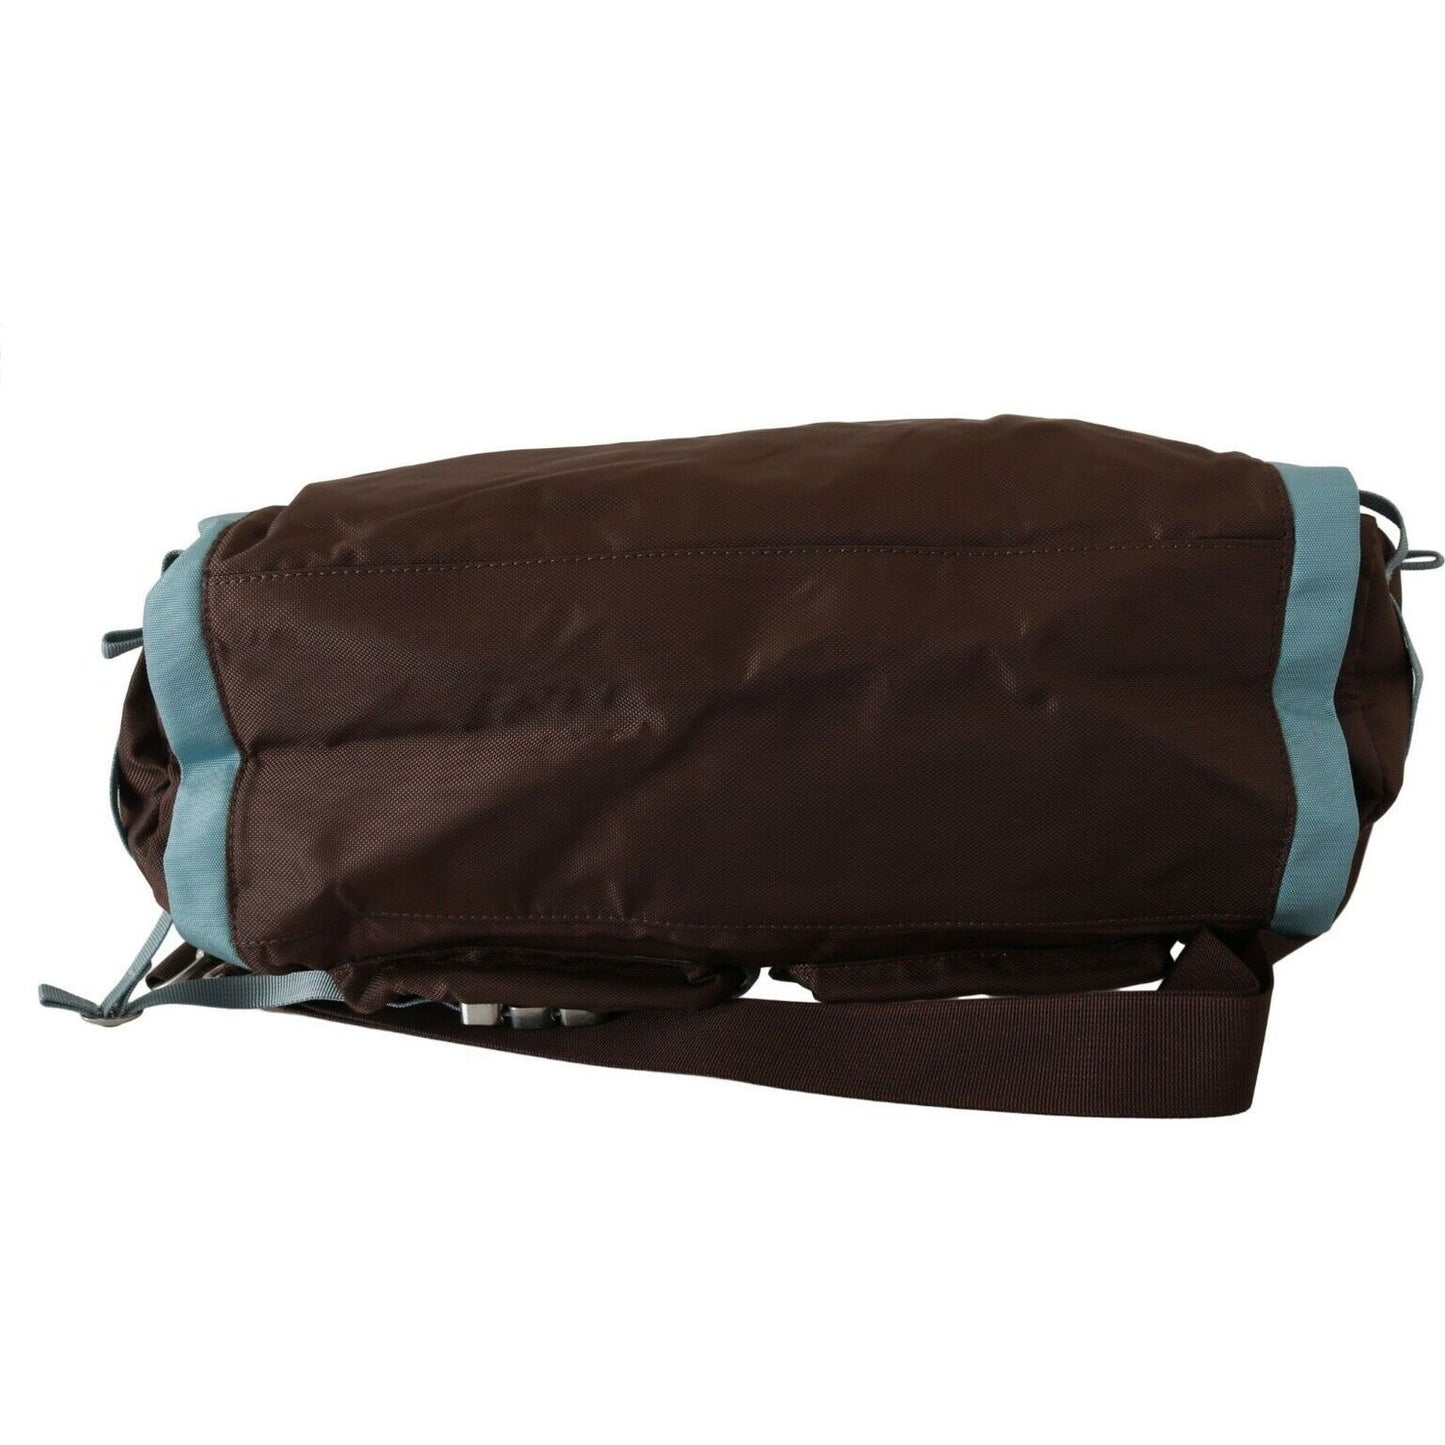 WAYFARER Elegant Duffel Travel Bag in Earthy Brown Luggage brown-handbag-duffel-travel-purse s-l1600-18-1-f6ef4317-21d.jpg